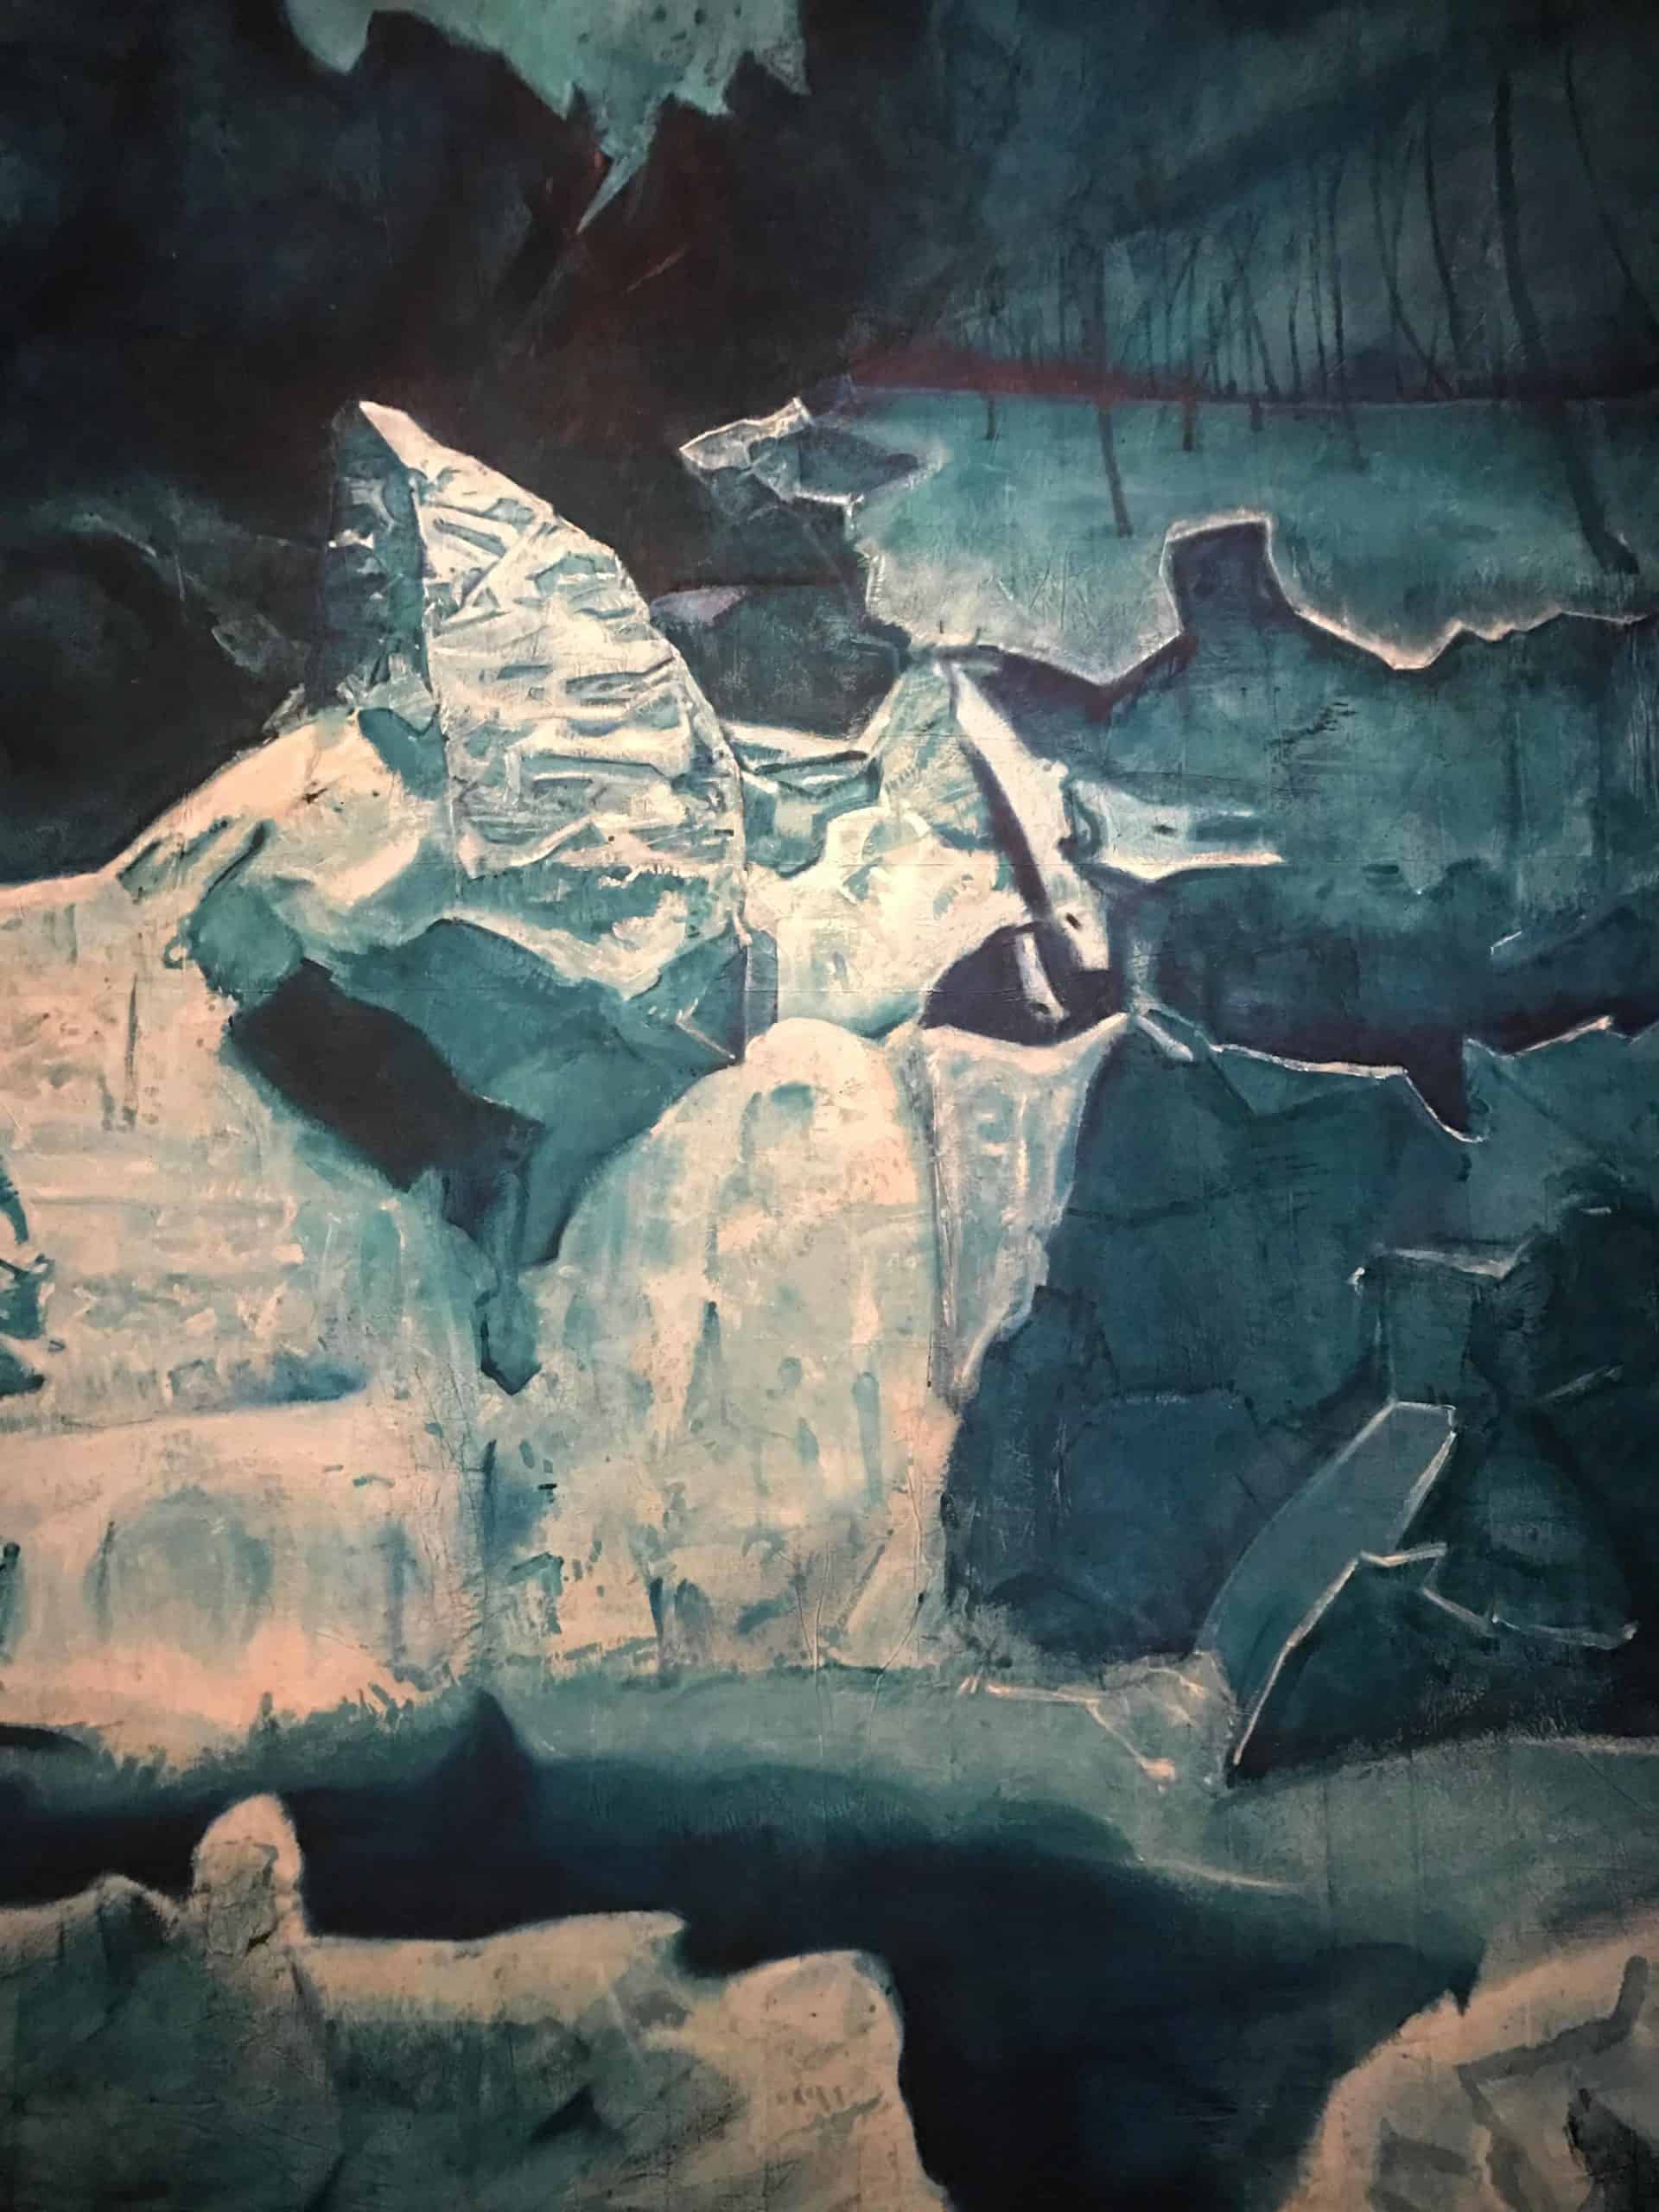 Cy Gavin's night painting of Bish Bash Falls glows in Lure of the Dark at Mass MoCA.